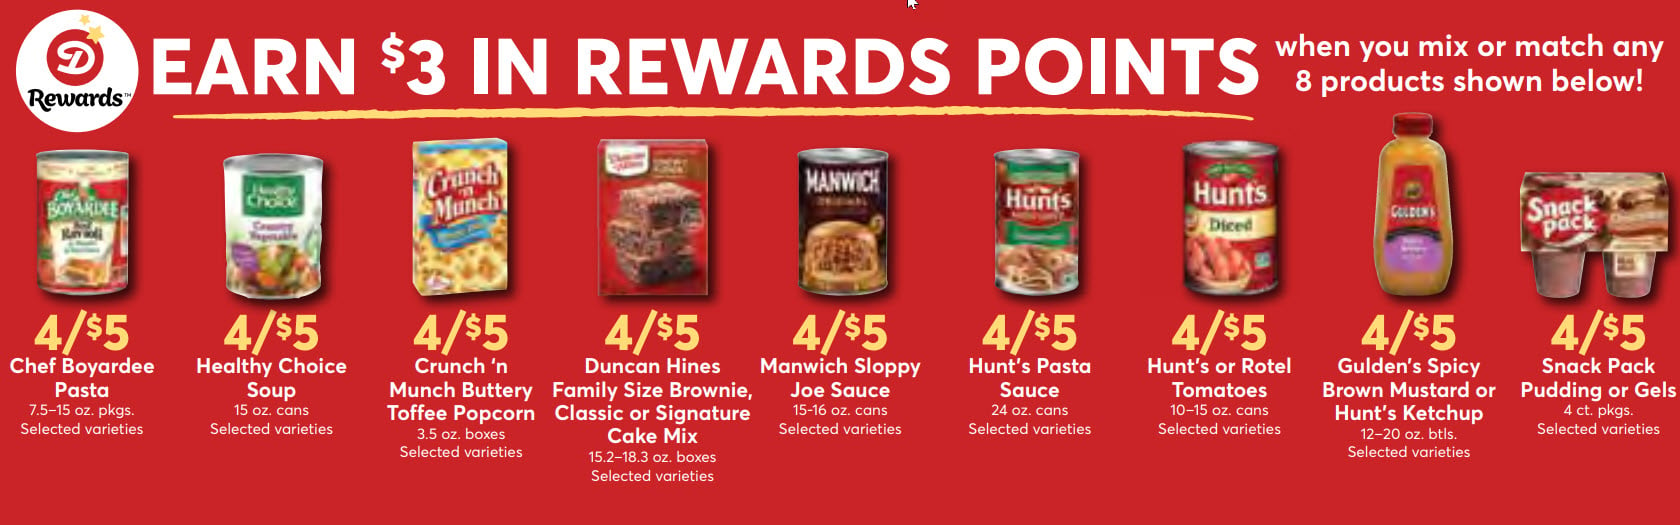 Snack pack reward points